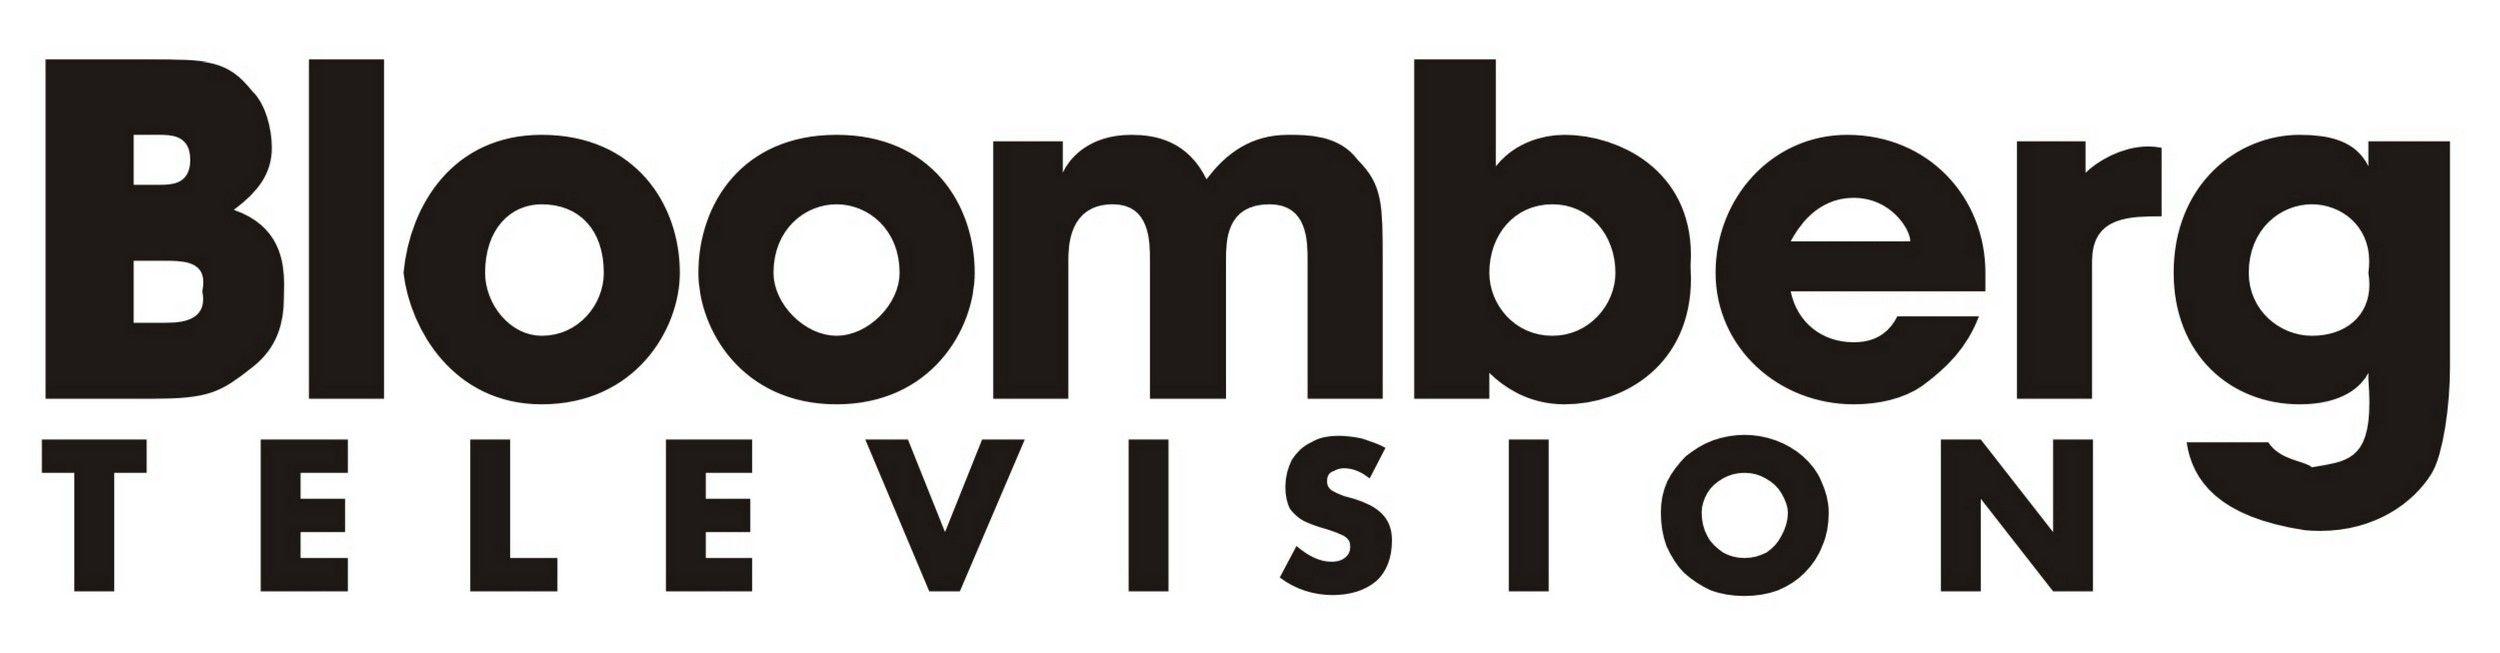 Bloomberg Logo - Bloomberg Television | Logopedia | FANDOM powered by Wikia